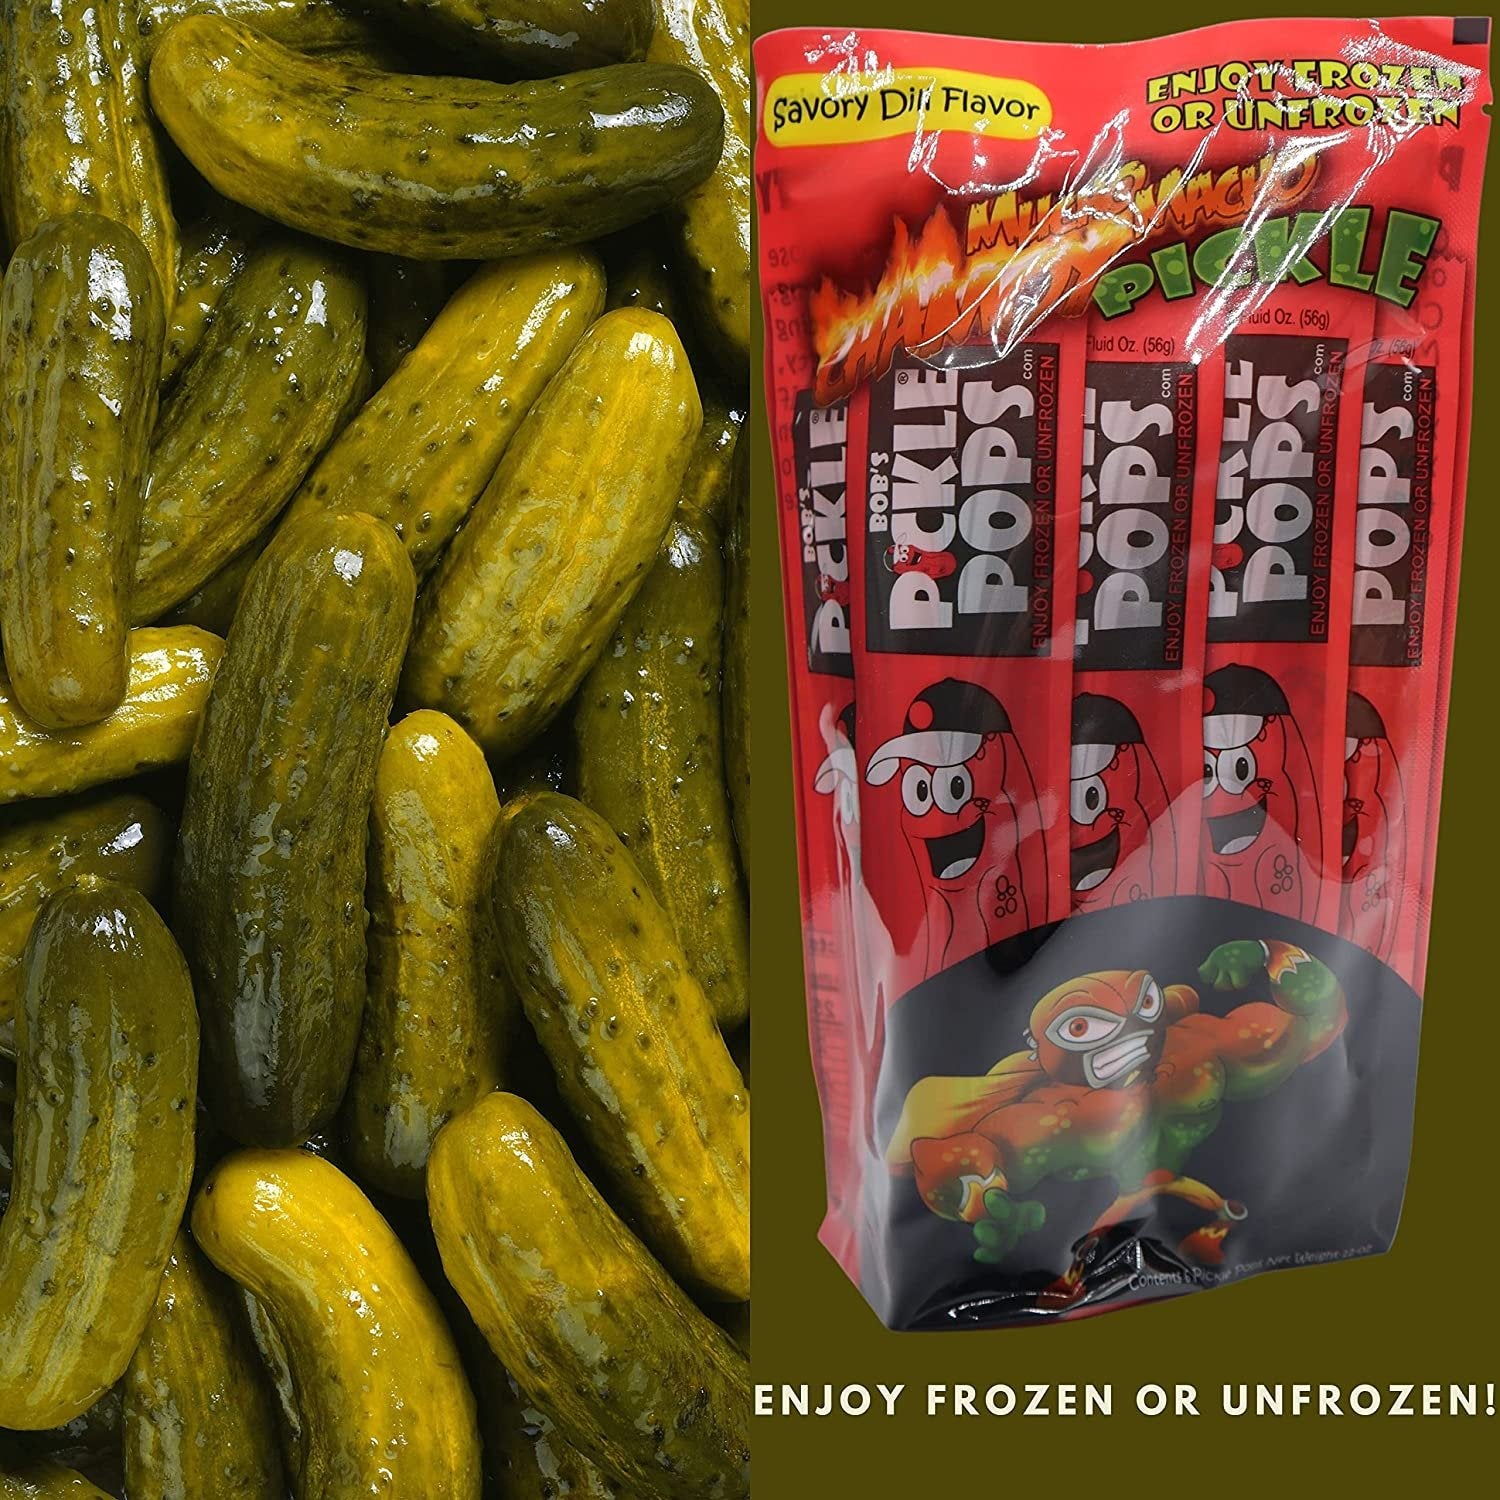 Bob's Pickle Pops - Mucho Macho Chamoy Pickle Flavor - Savory Dill Flavor - 6 Count - Pack of 1 (2 Fl Oz per Pop) Keto Friendly, Enjoy Frozen or Unfrozen.